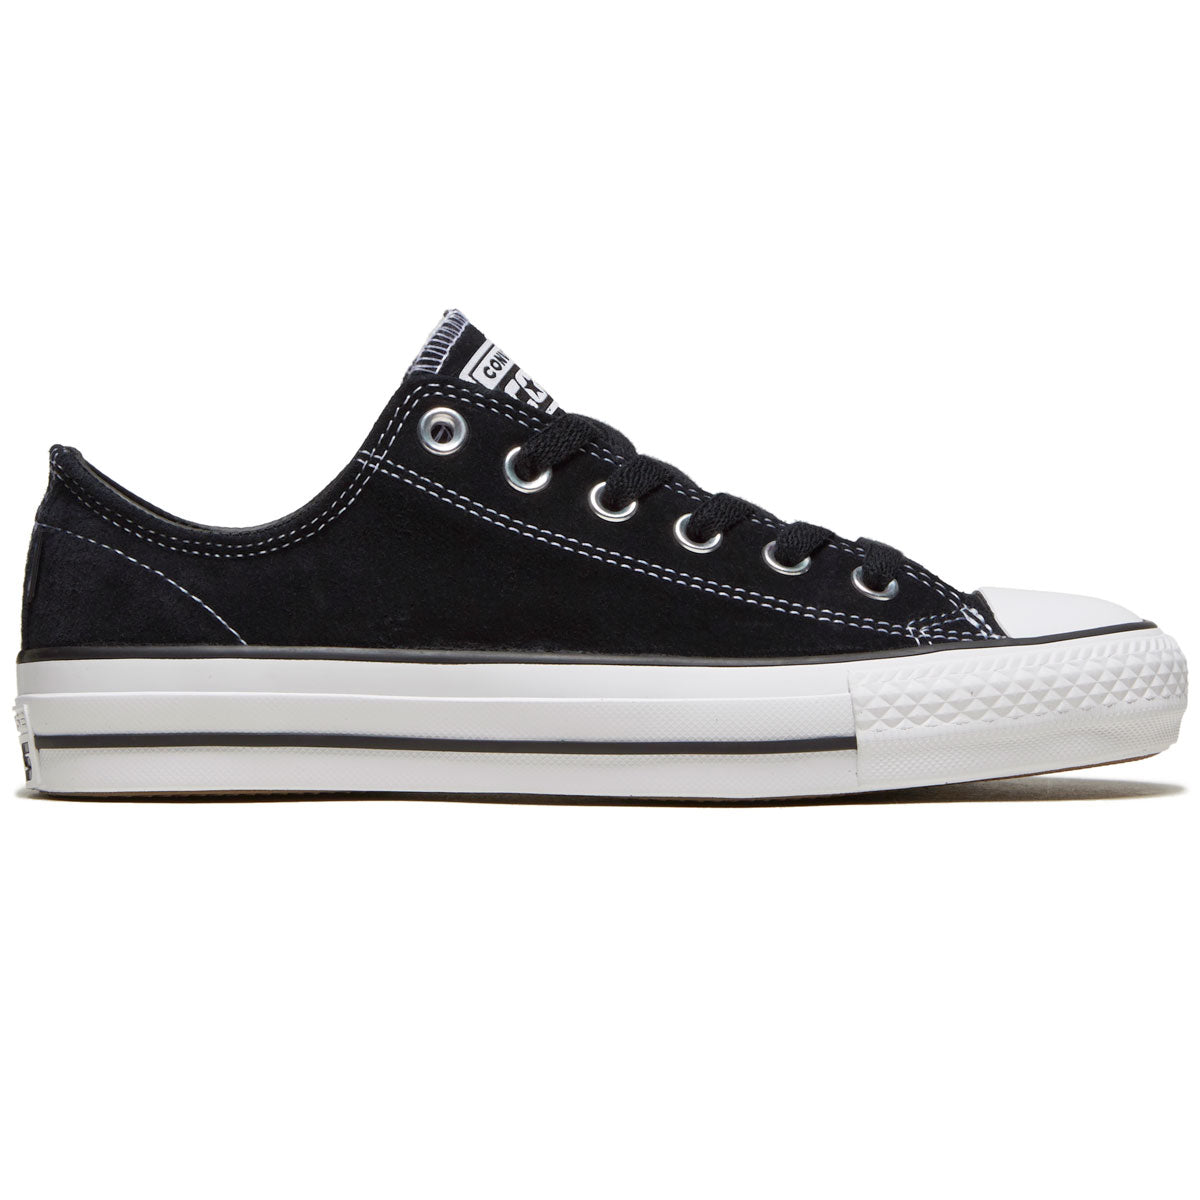 Converse Taylor All Star Pro Ox Shoes Black/Black/White CCS